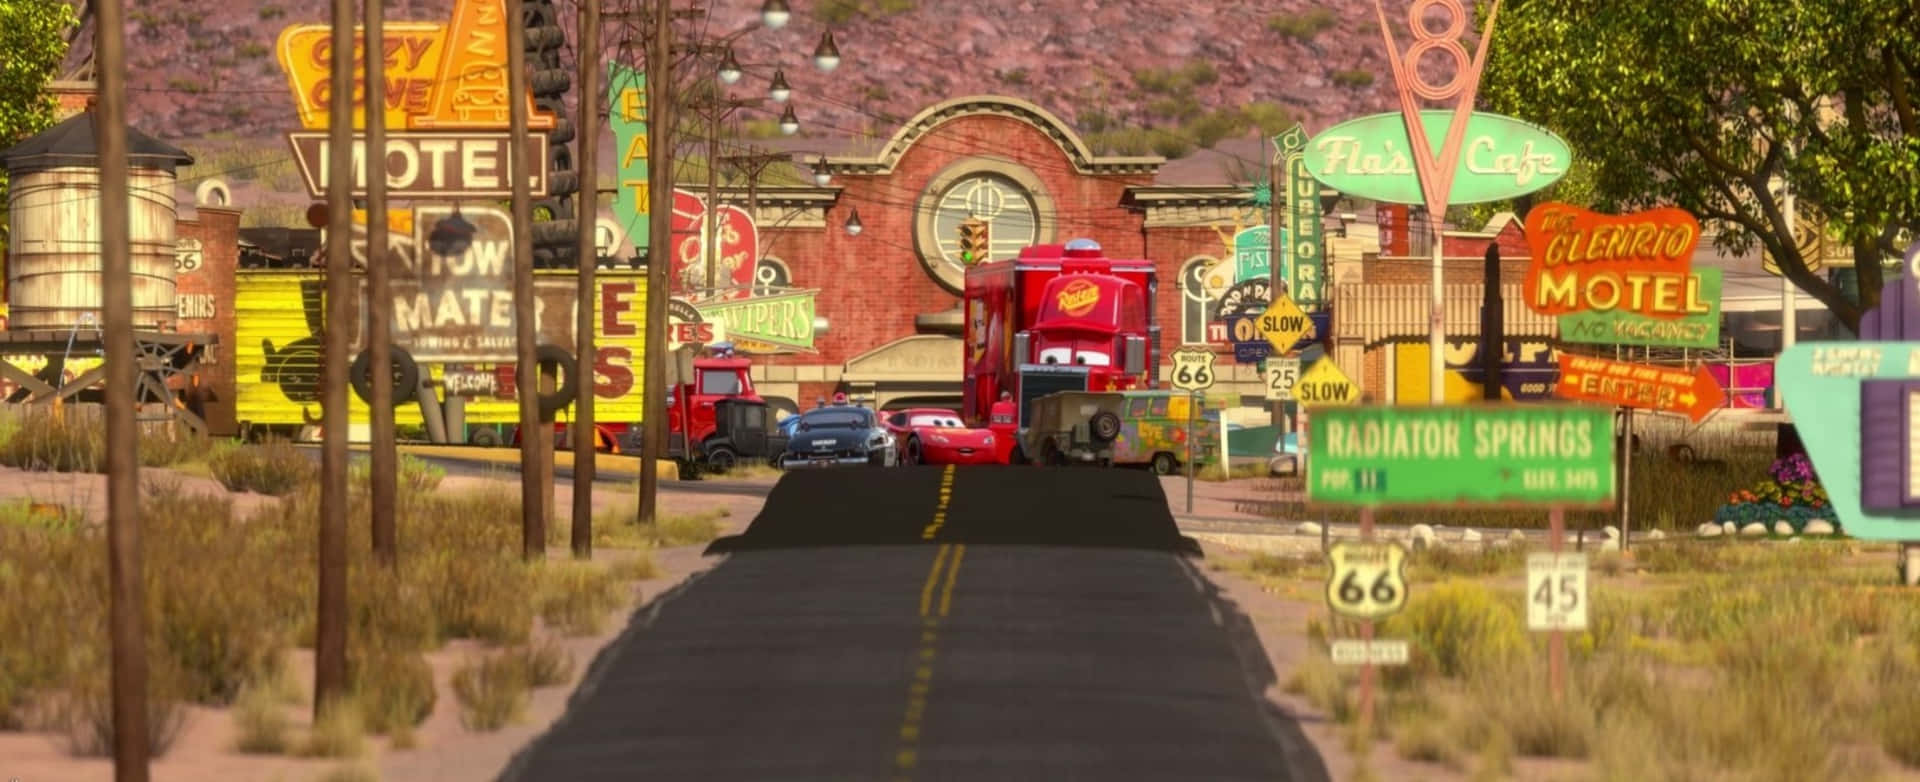 Imagenfija De La Película De Disney Cars En Radiator Springs De La Ruta 66. Fondo de pantalla